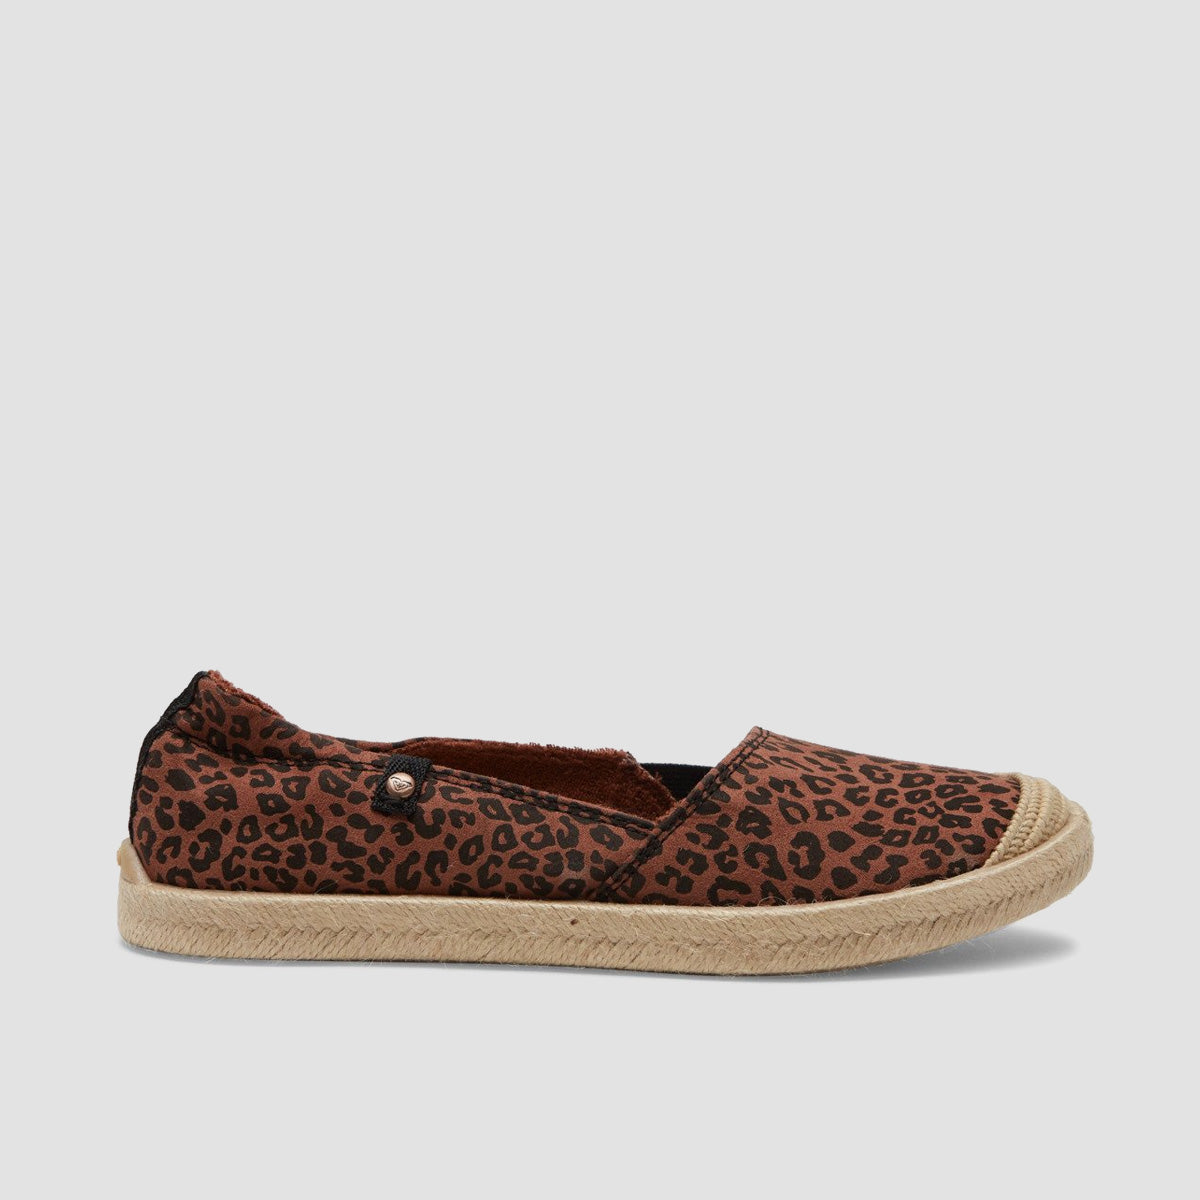 Roxy Cordoba Slip-On Shoes - Cheetah Print - Womens